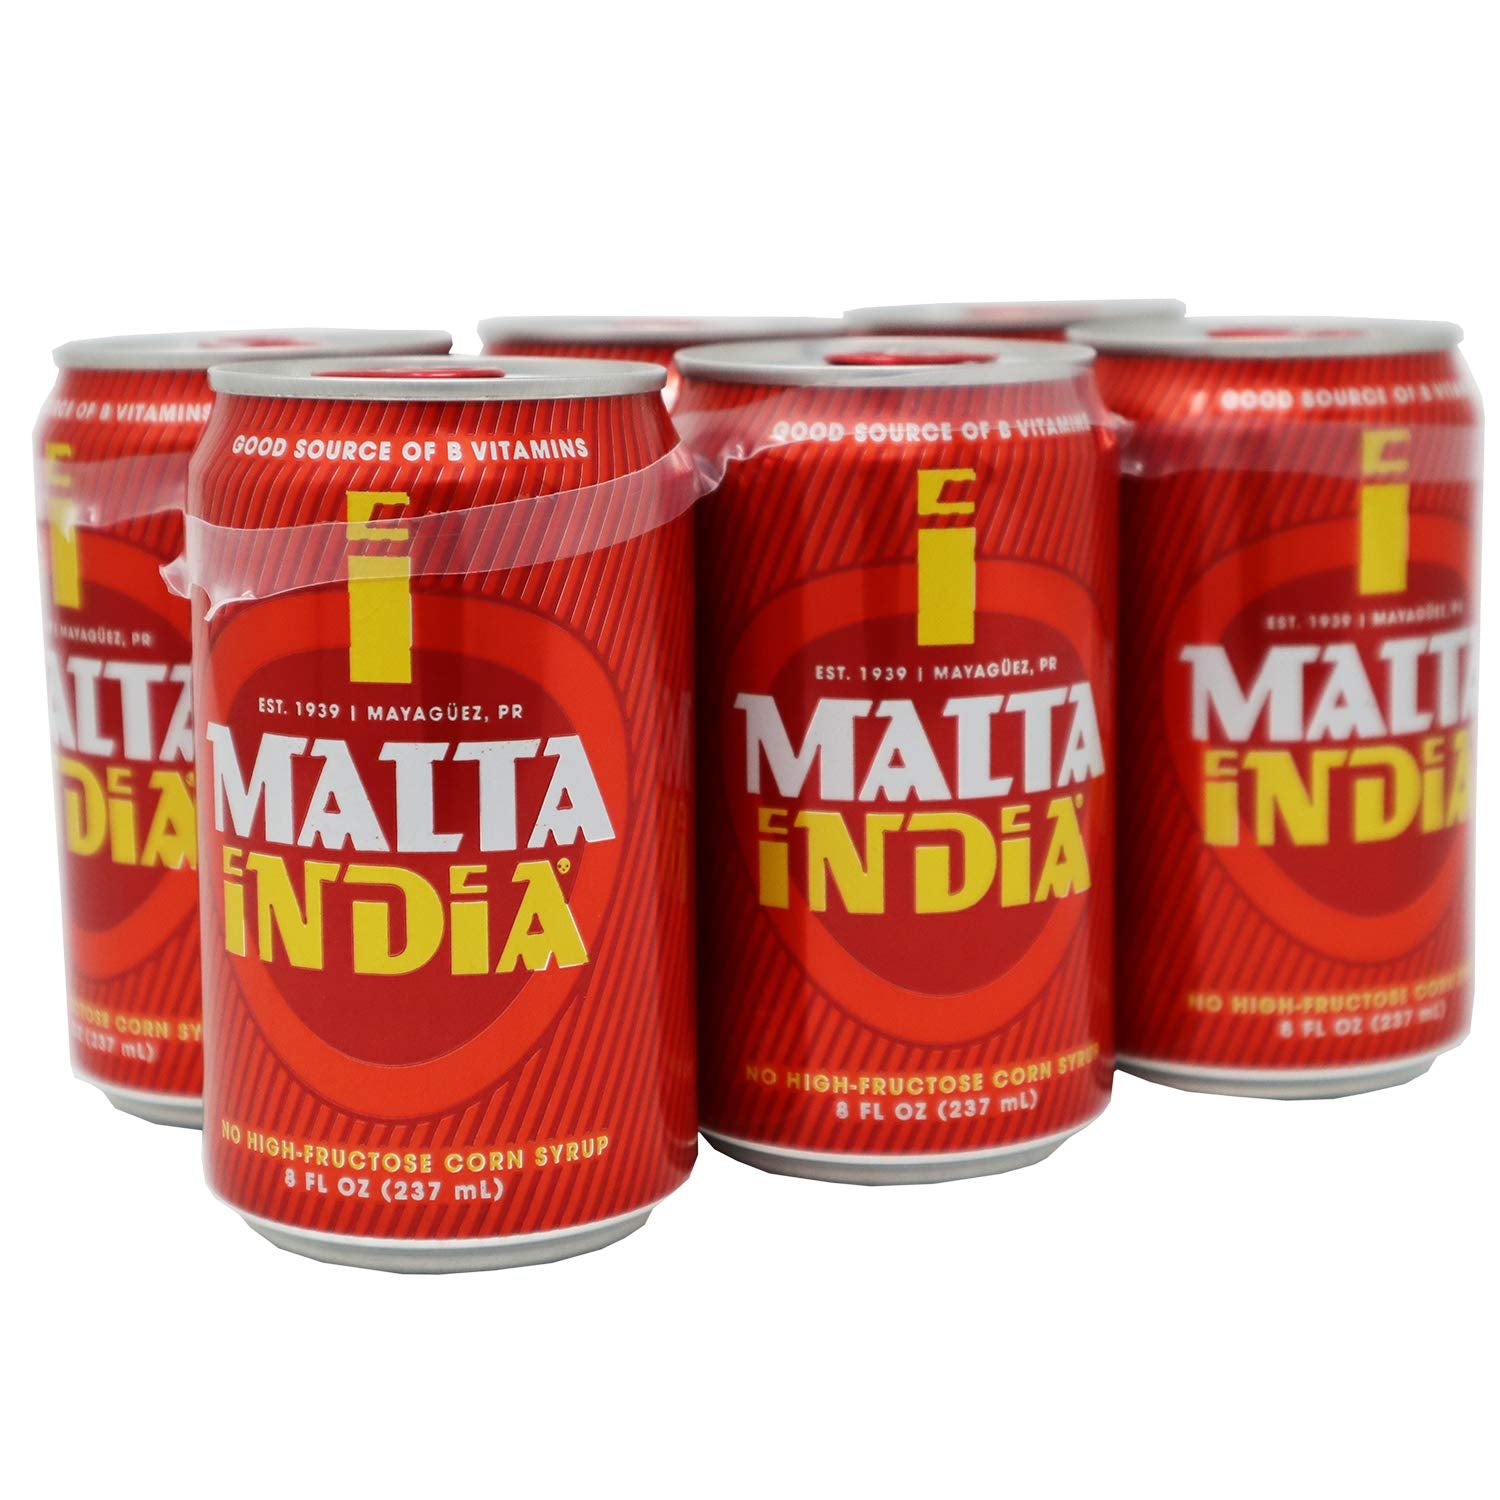 MALTA INDIA (SIX PACK)